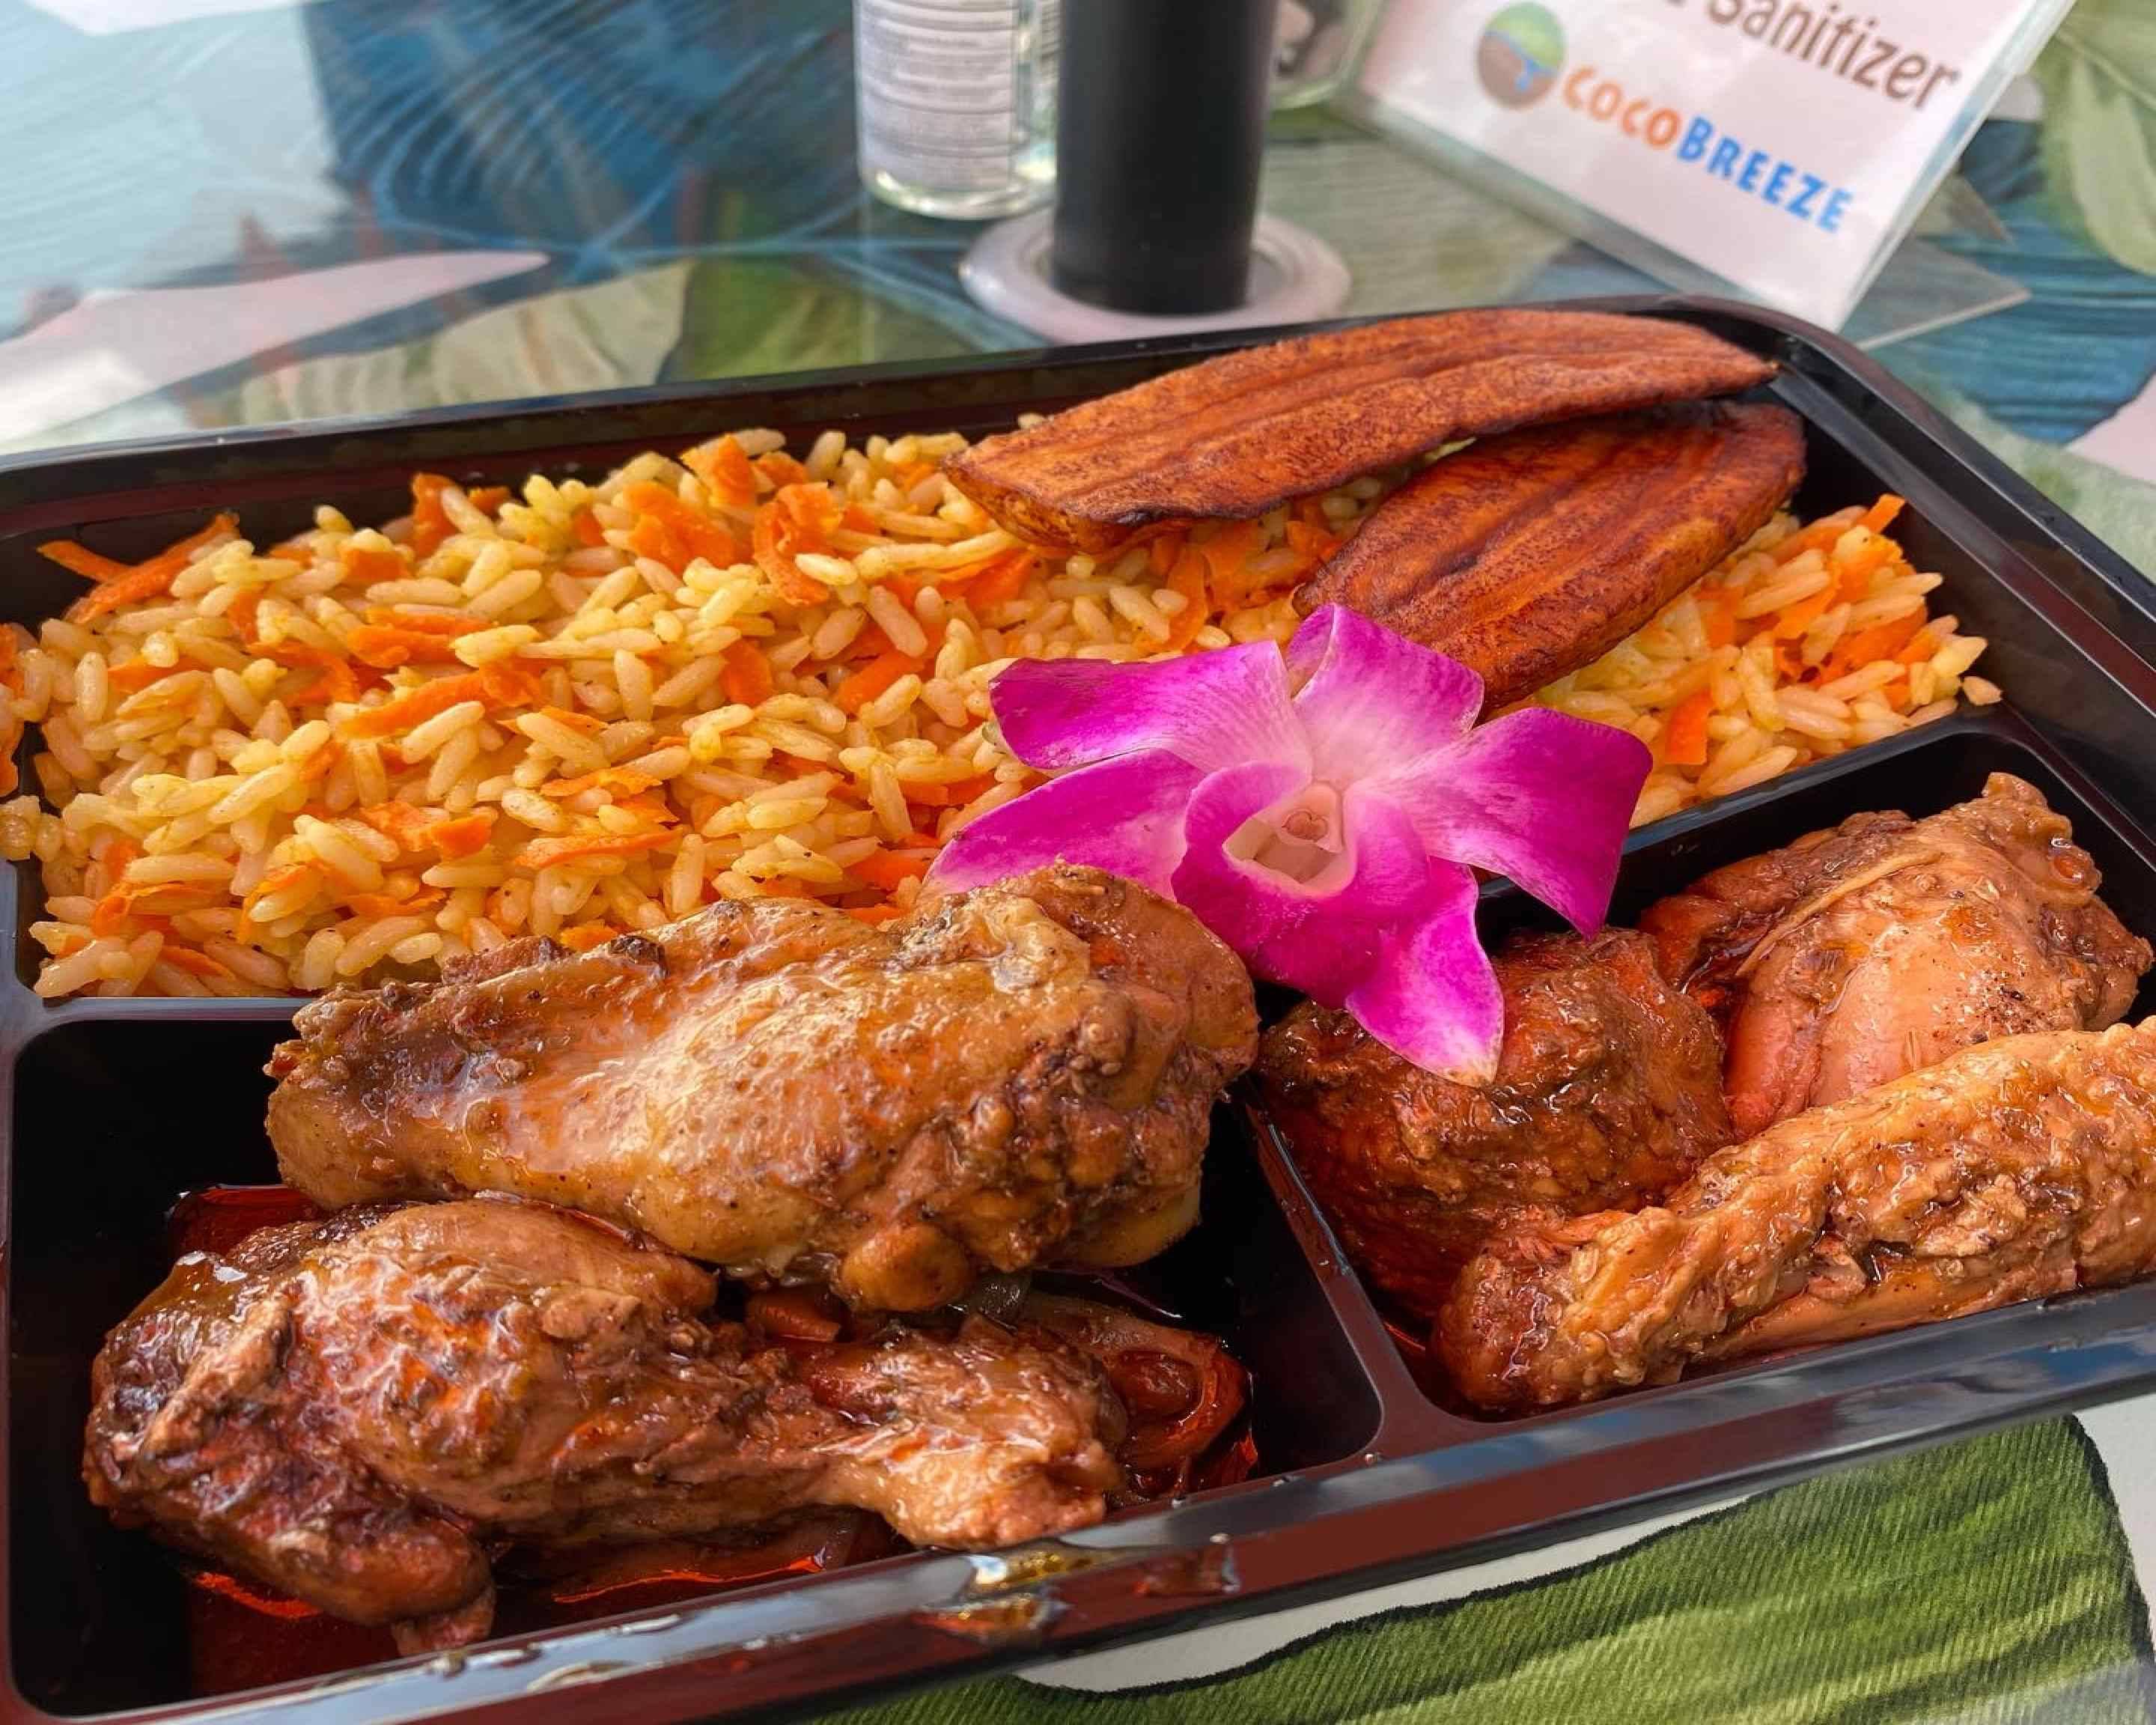 MENU, Island Breeze, Jamaican & Carribean restaurant